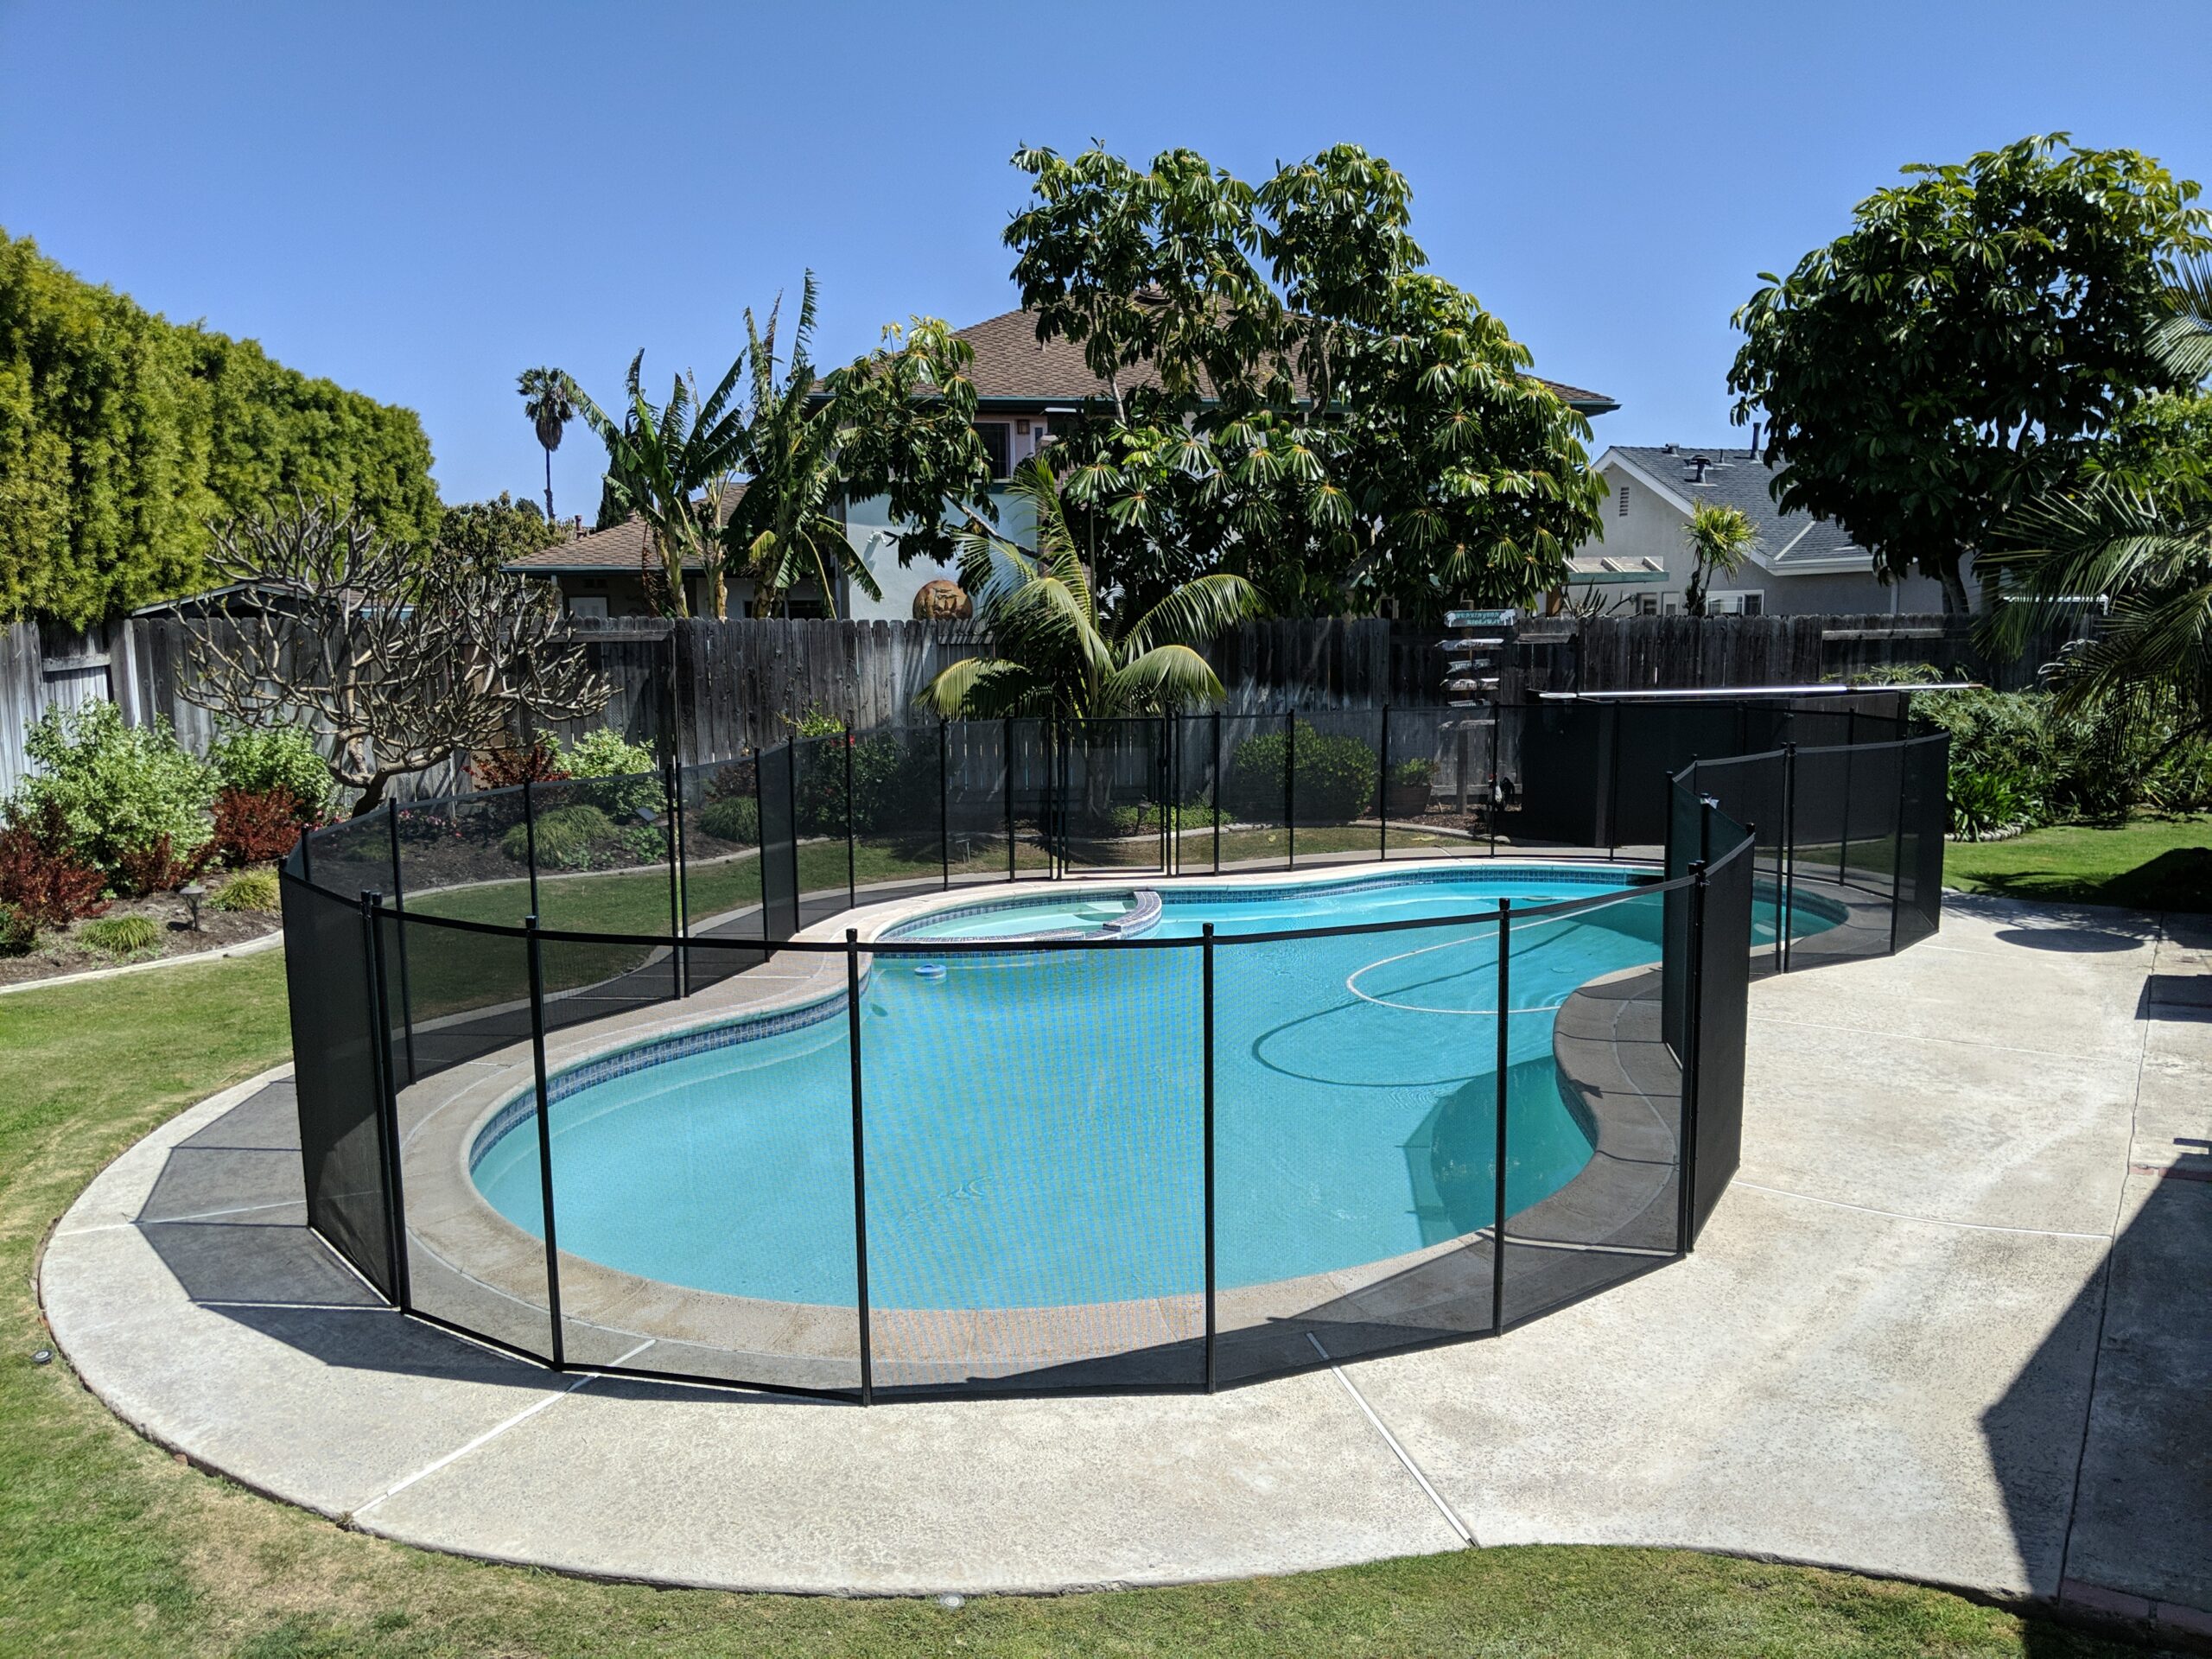 Black pool fence installed on an irregular shaped pool